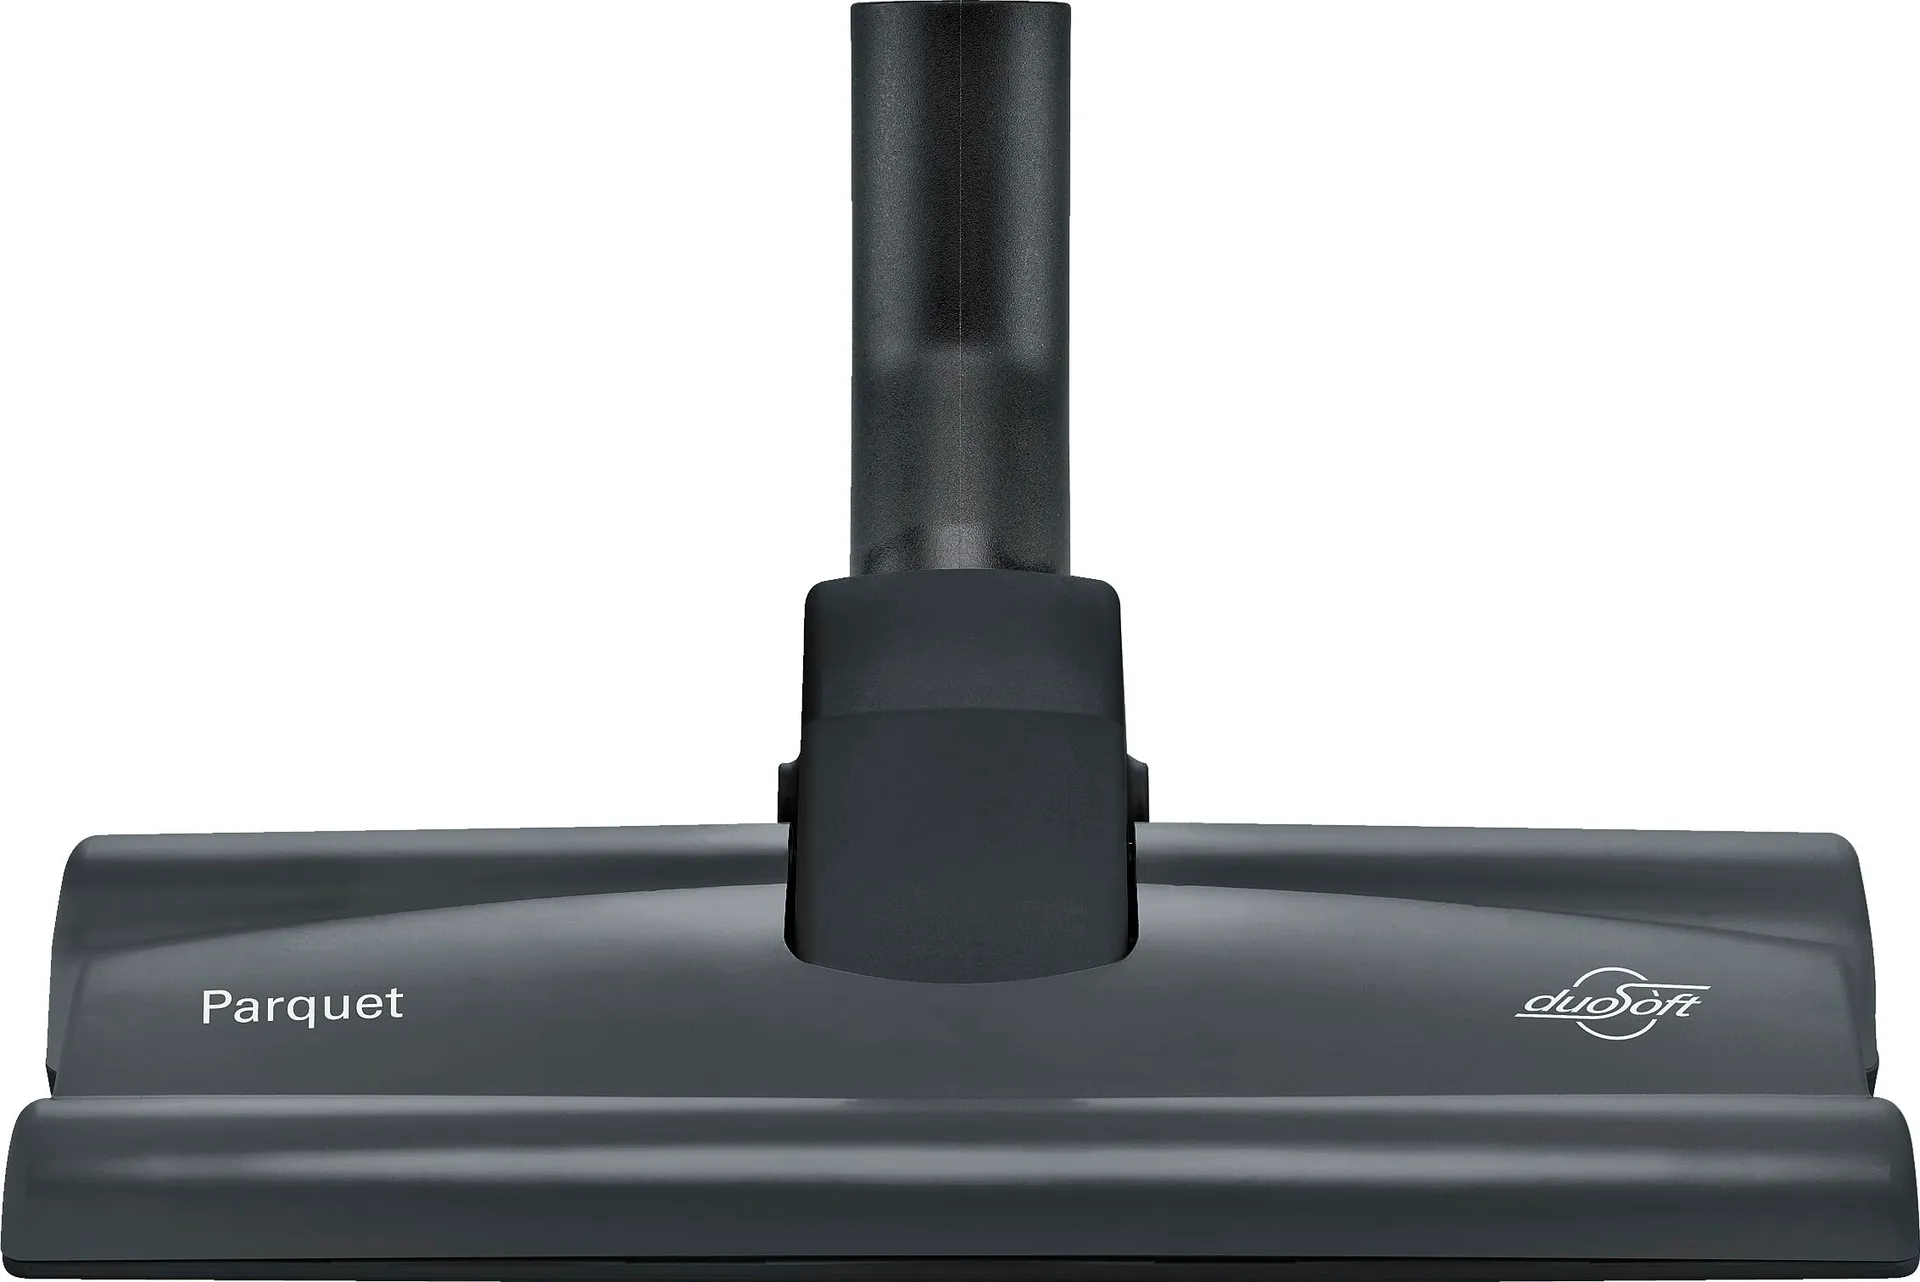 Bosch suulake DuoSoft BBZ124HD koville pinnoille - 1